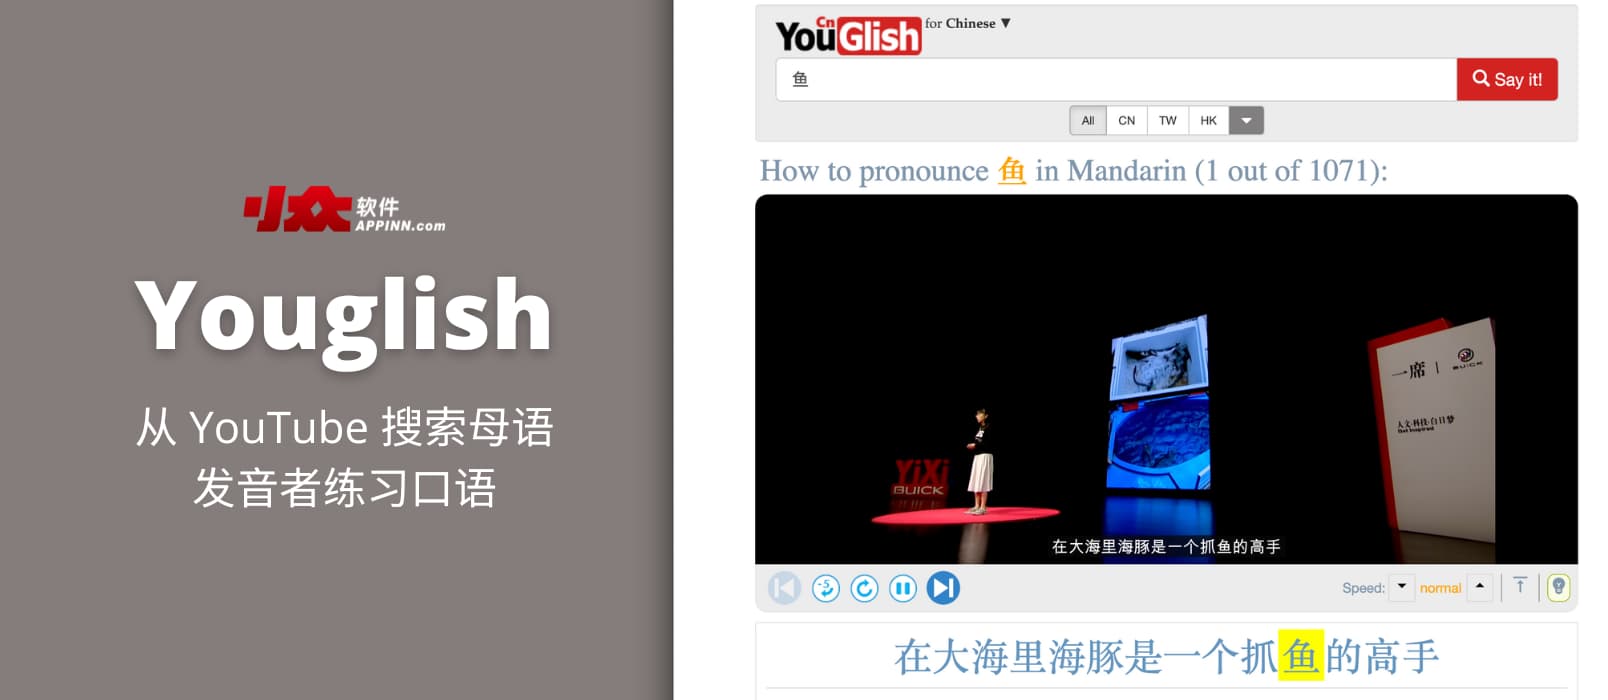 Youglish - 从 YouTube 搜索母语发音者，练习口语，支持英文、中文、手语在内的 18 种语言